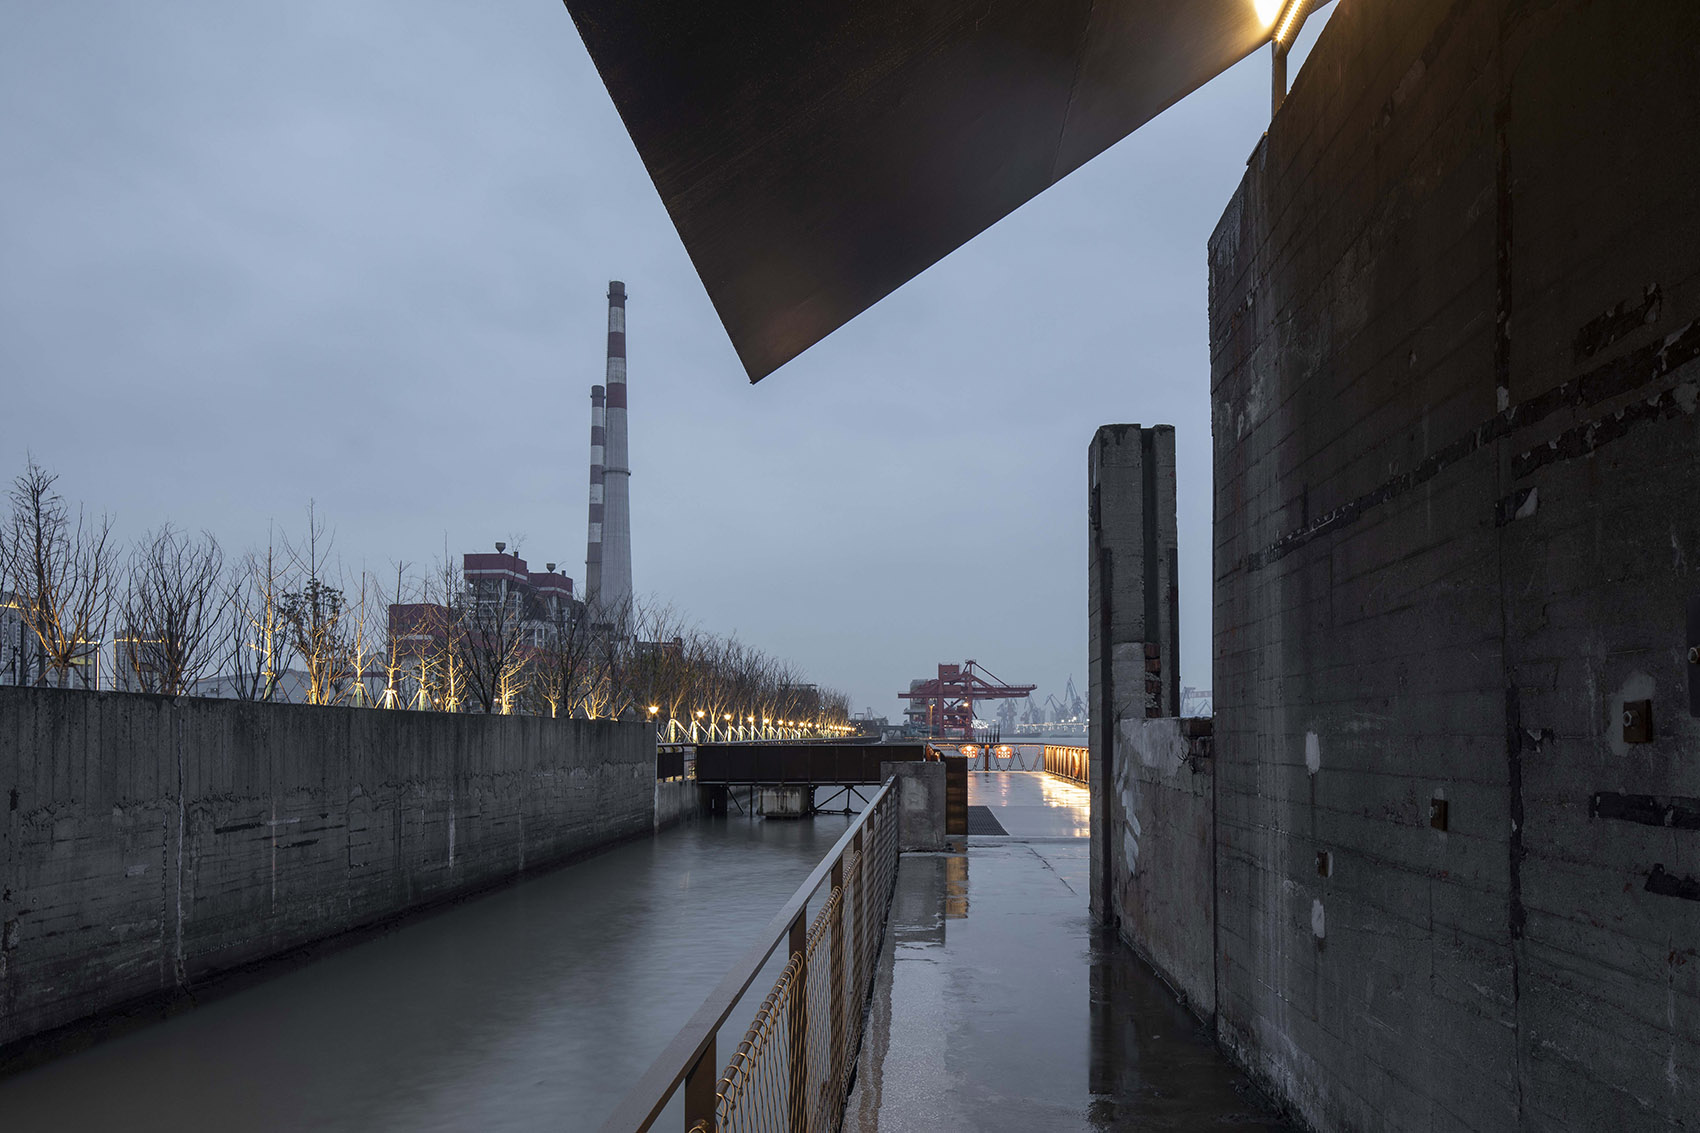 005-riverside-passage-yang-pu-riverfront-urban-space-renovation-china-by-atelier.jpg